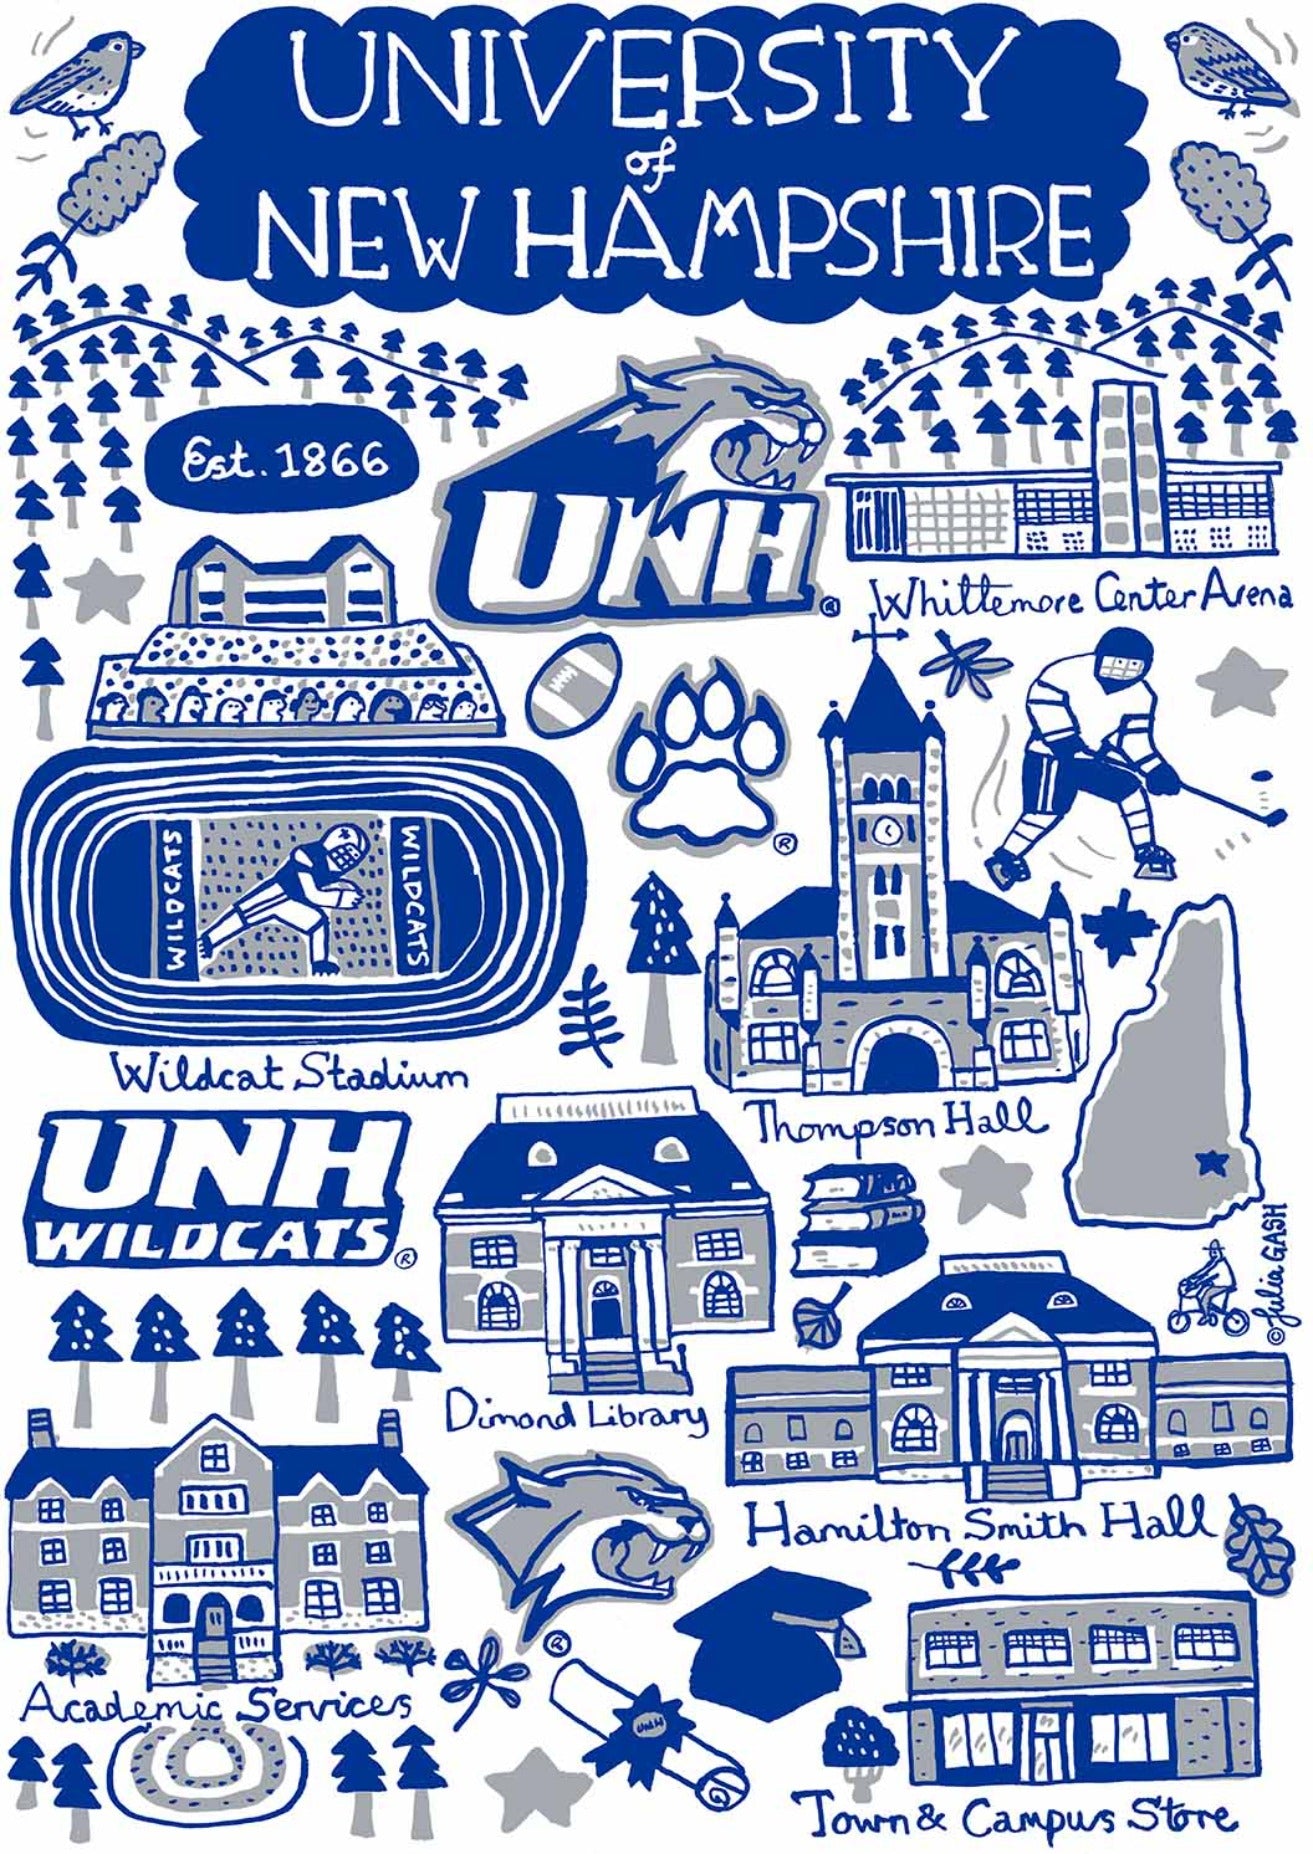 University of New Hampshire by Julia Gash